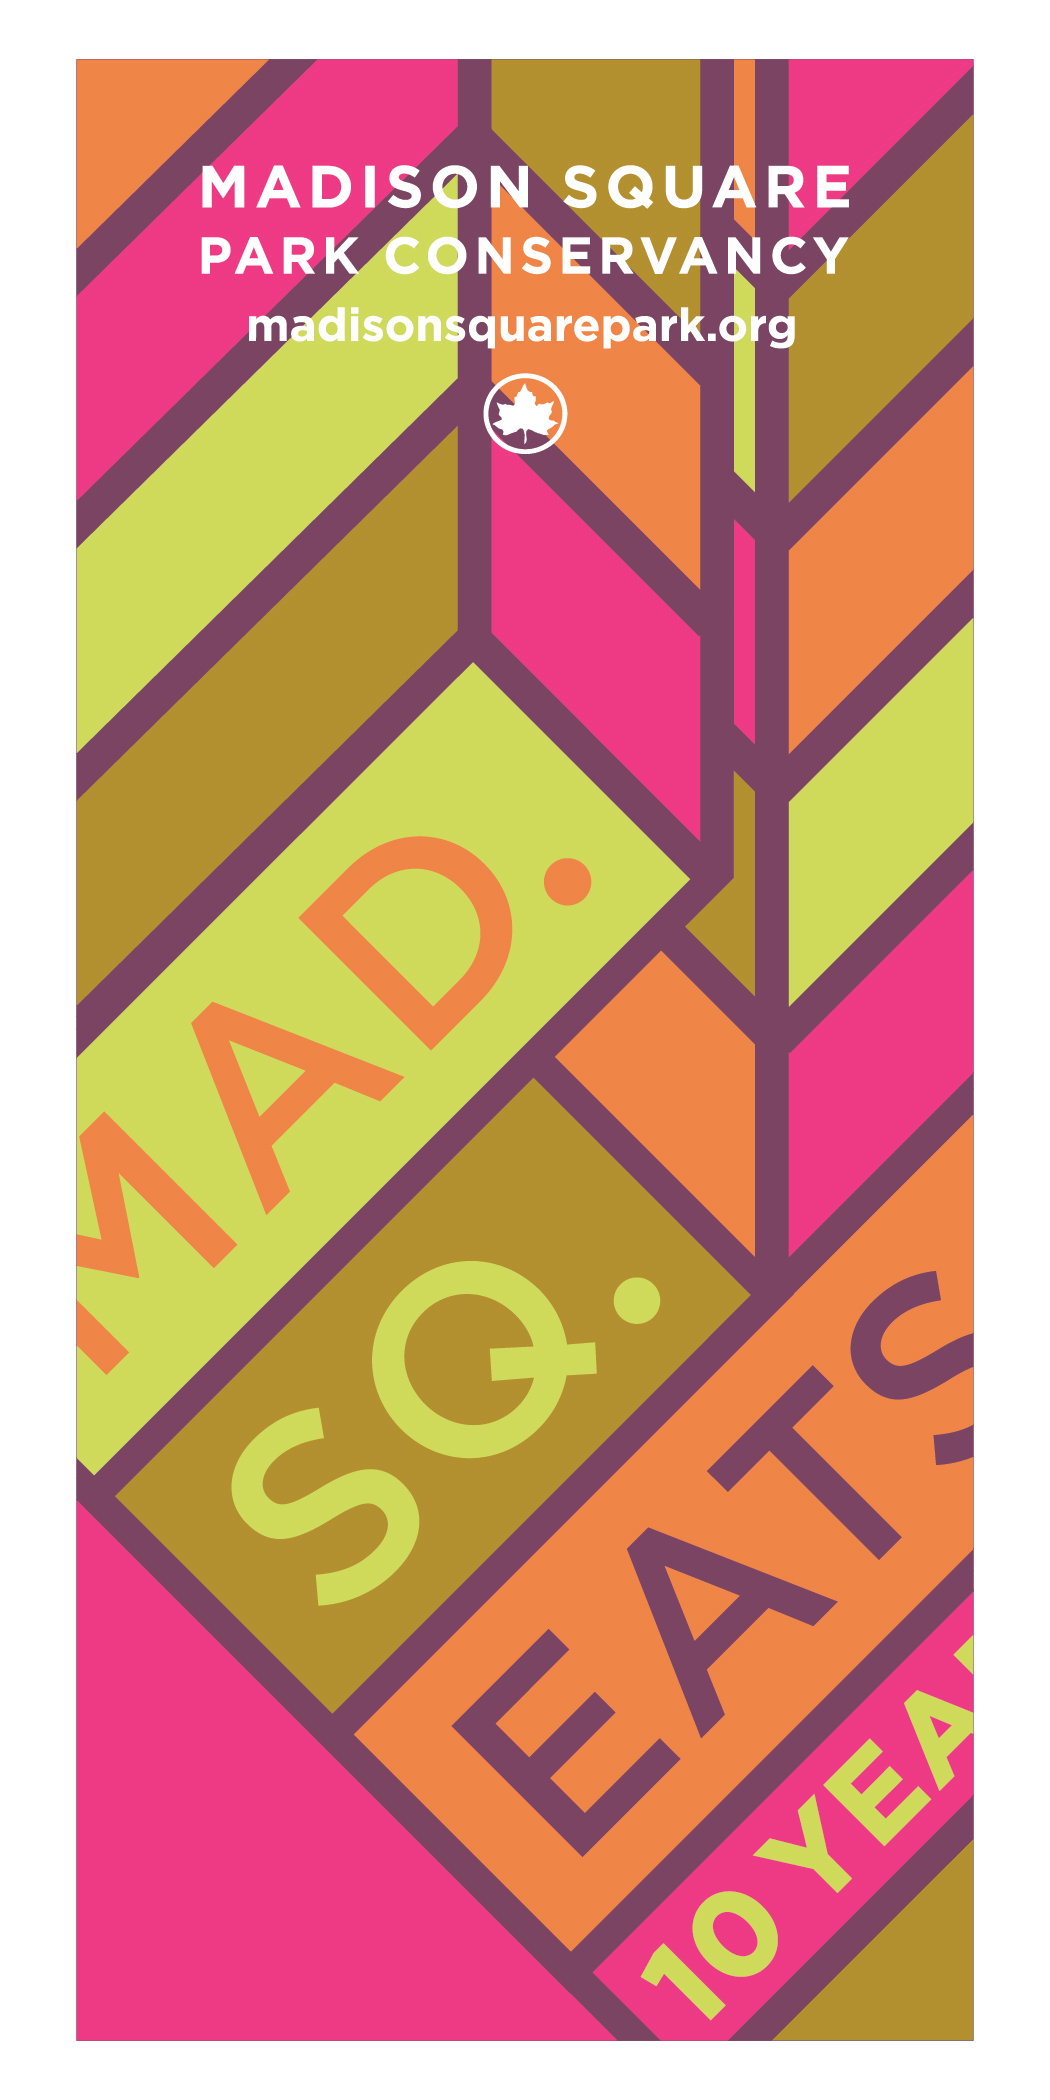 Pentagram MSQ Madison Square Park Fall banner paula scher identity